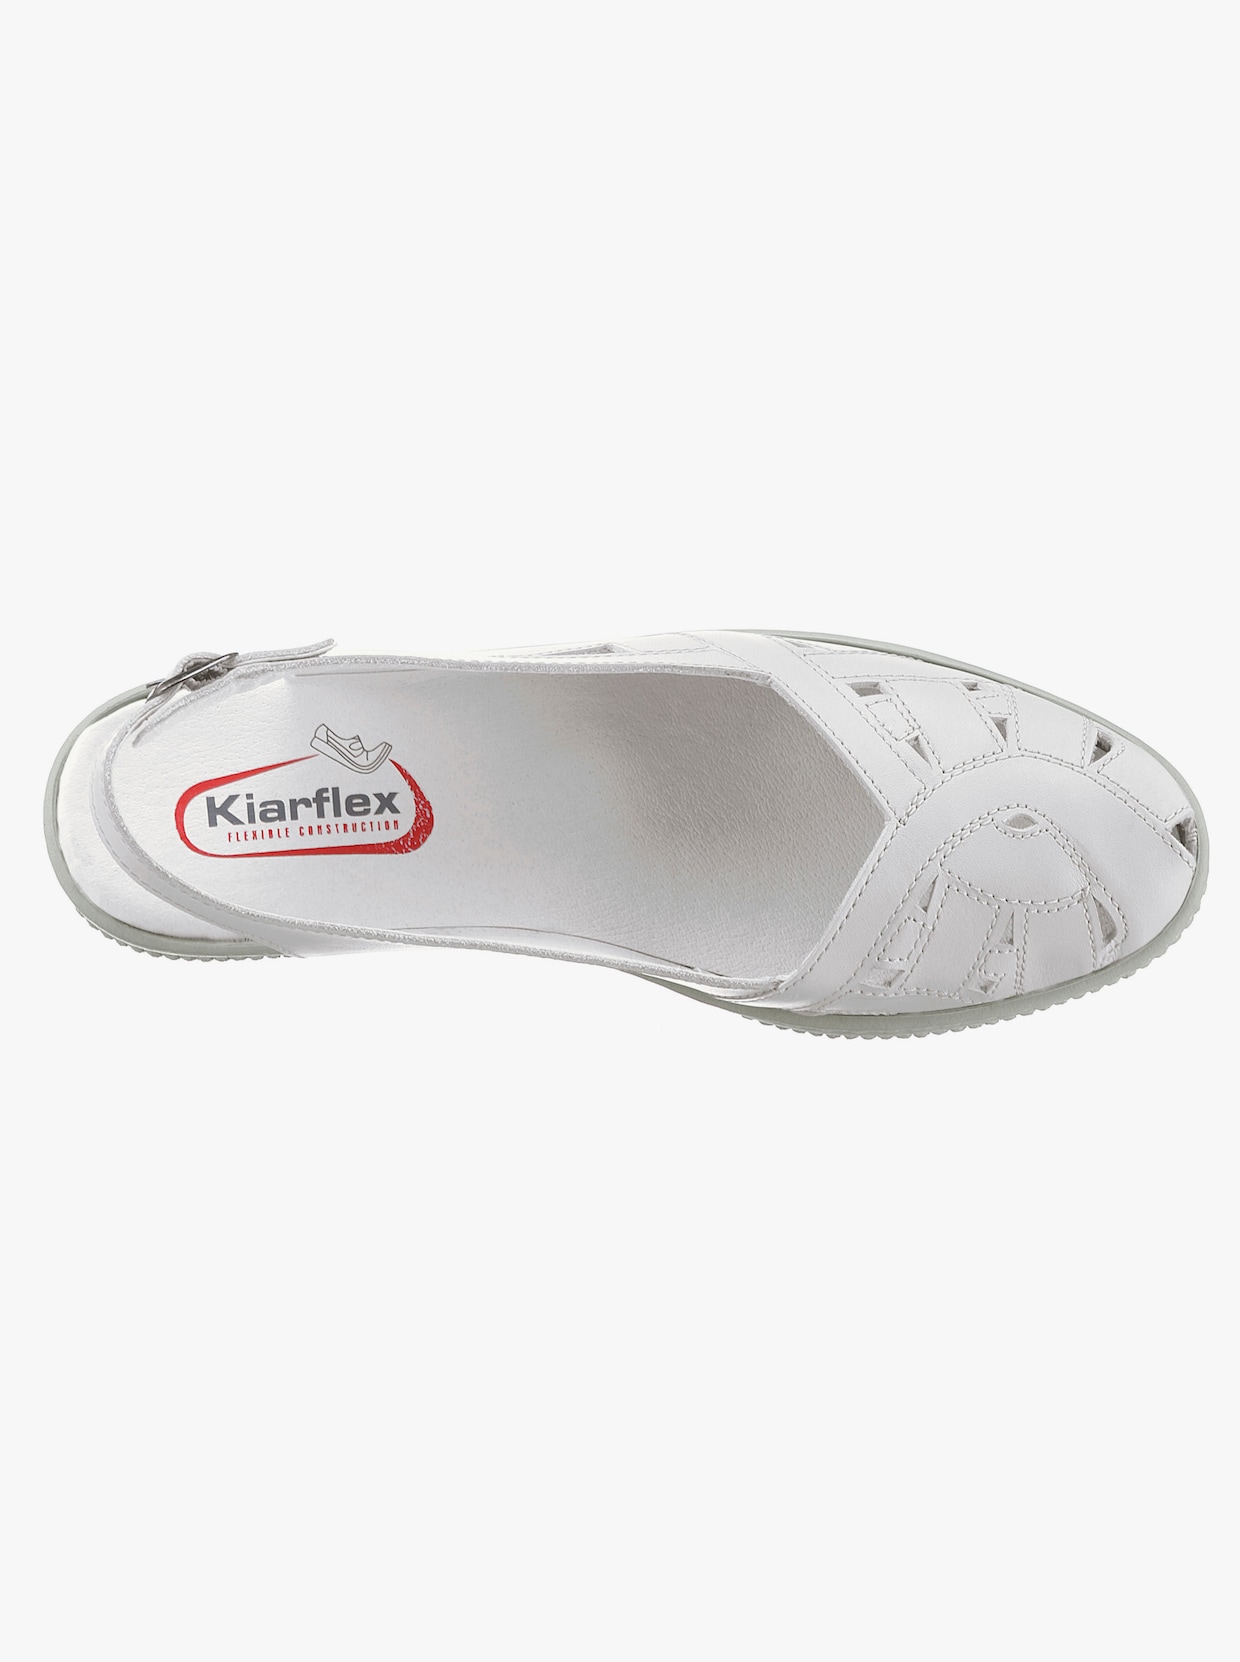 Kiarteflex sandaaltjes - wit